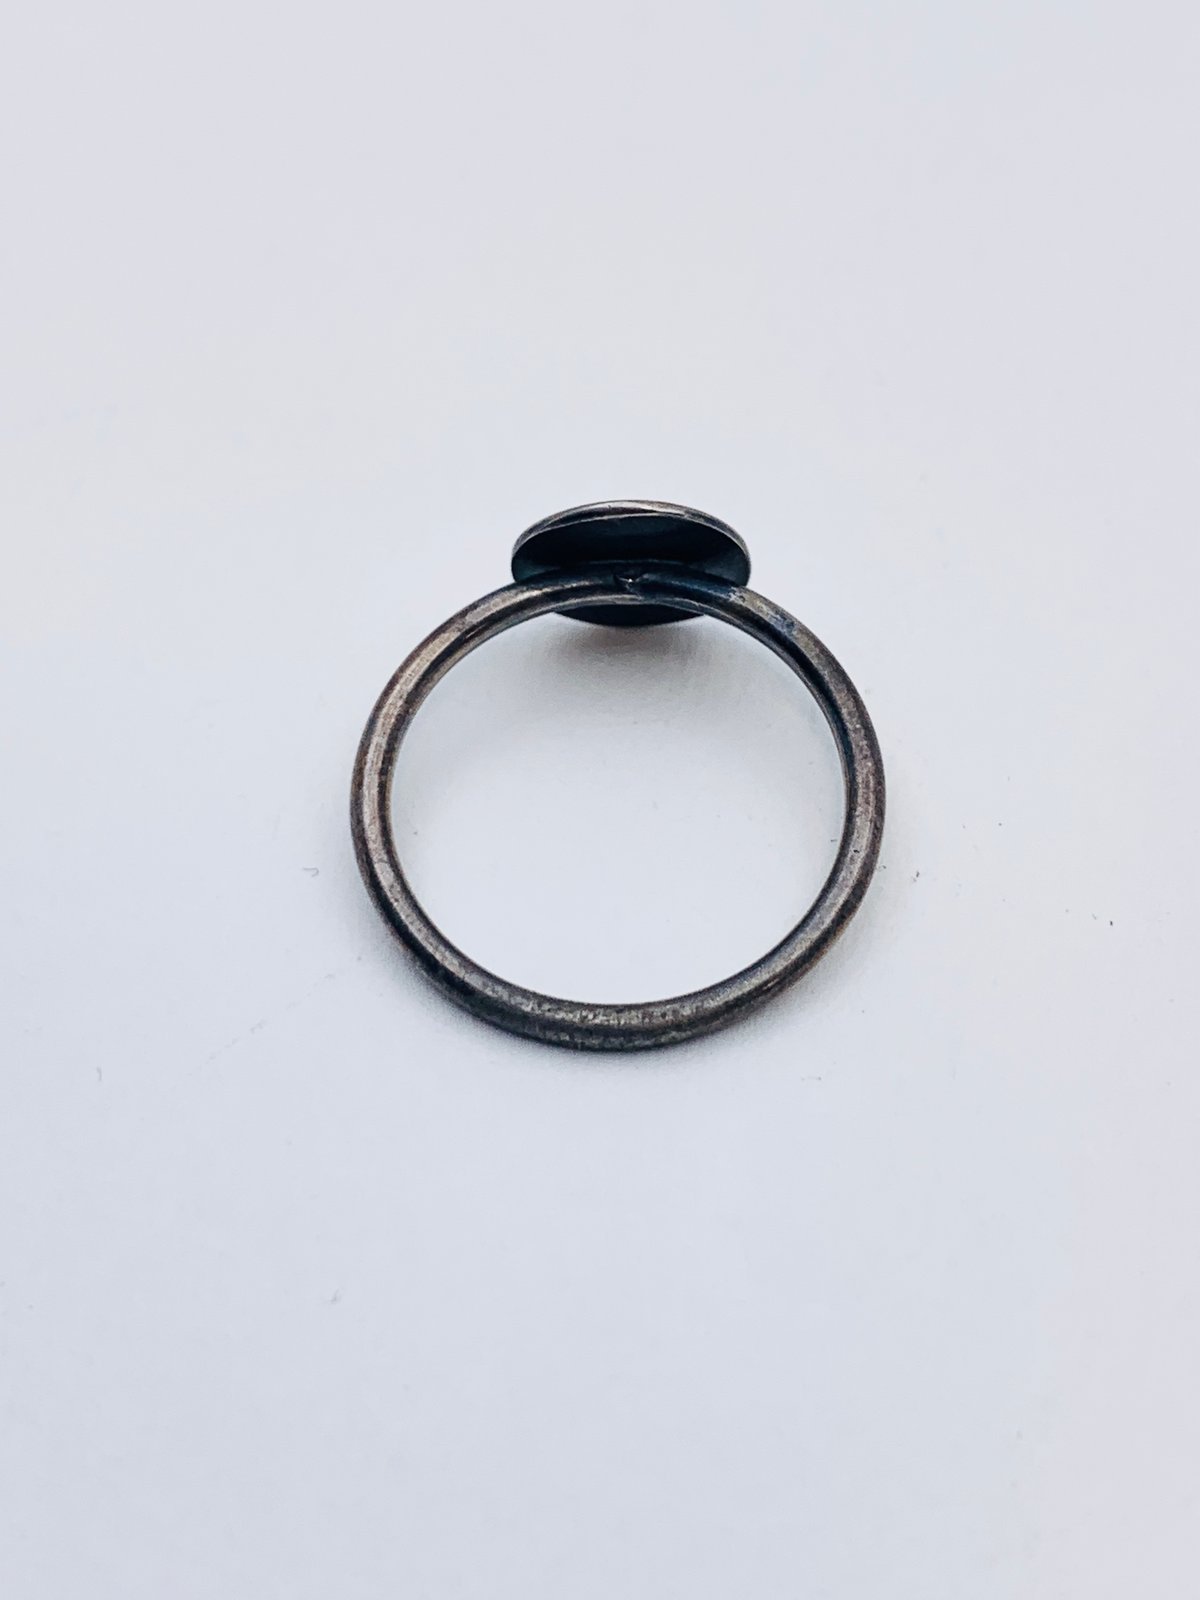 Silver "X" Ring by Kelly Draper